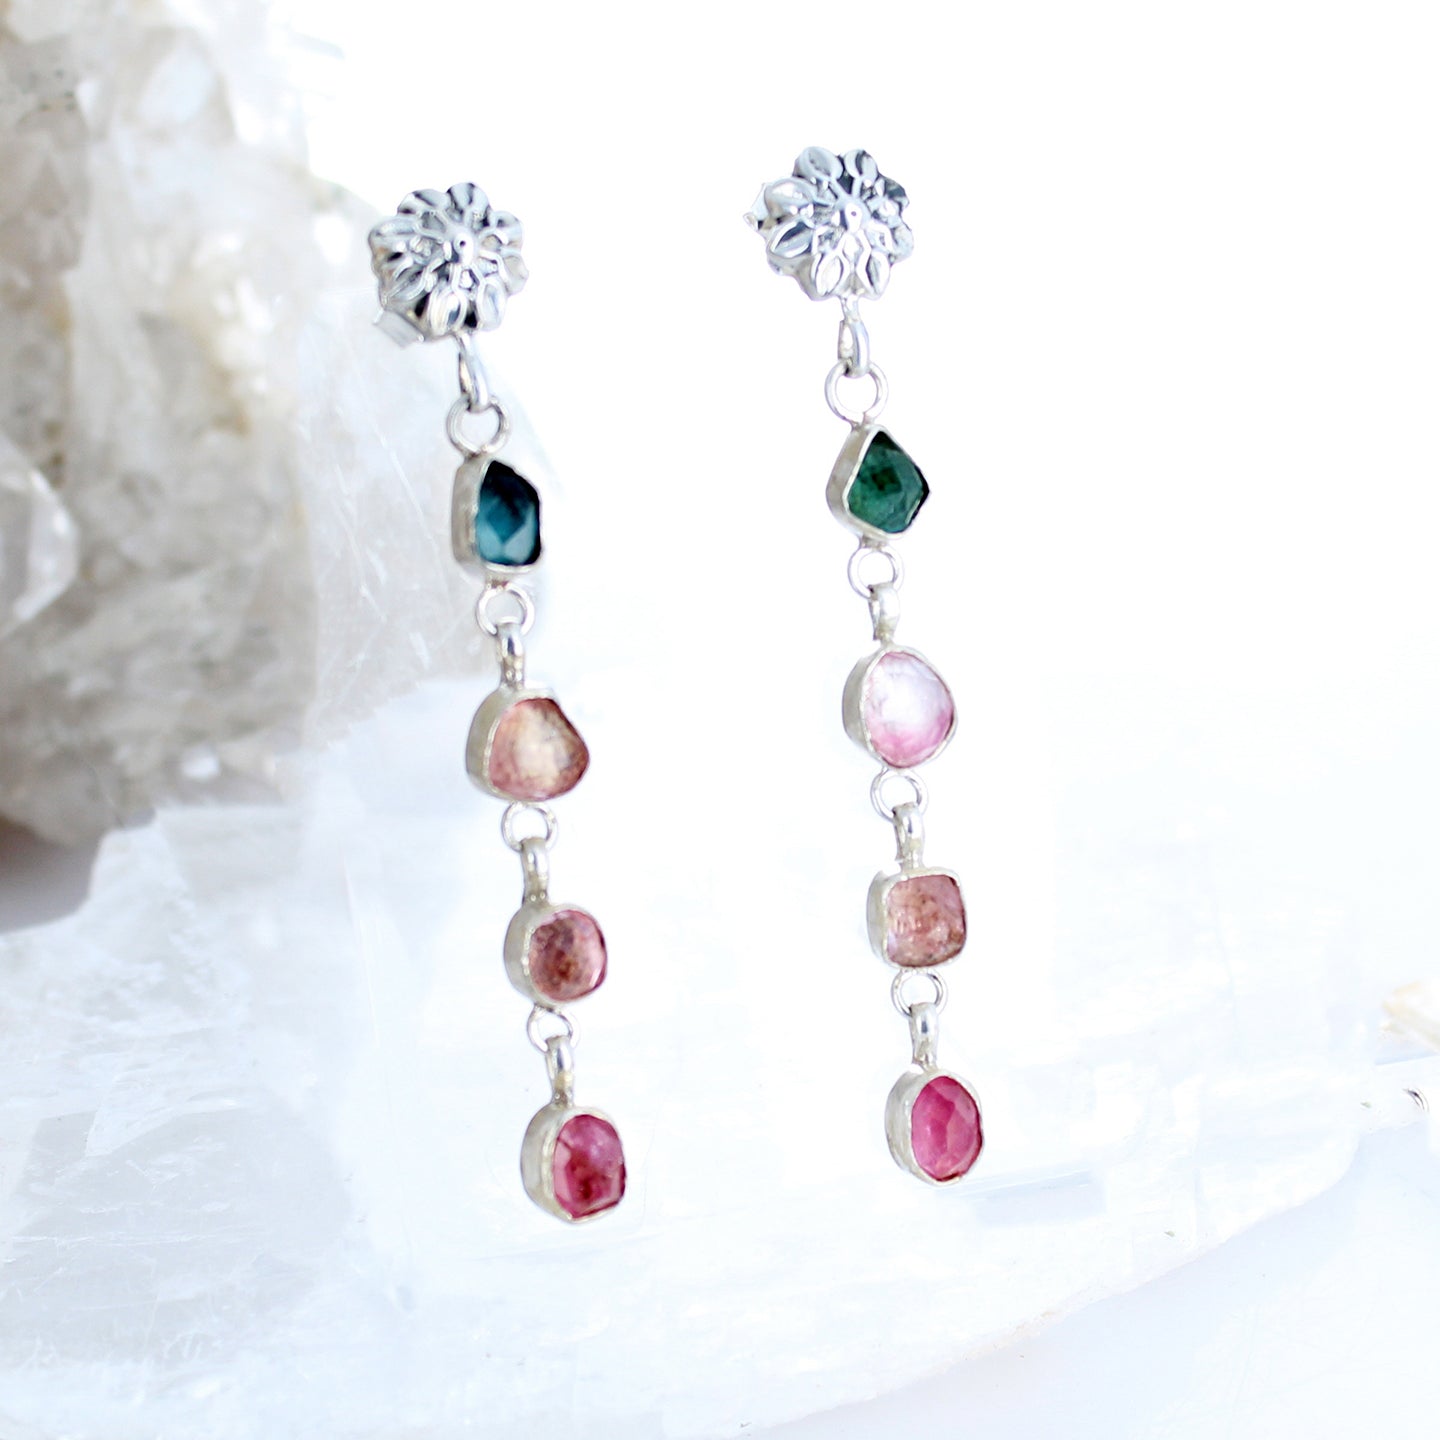 Blue and Pink Tourmaline Sterling Earrings 4 Stone Beauties #2 -NewWorldGems